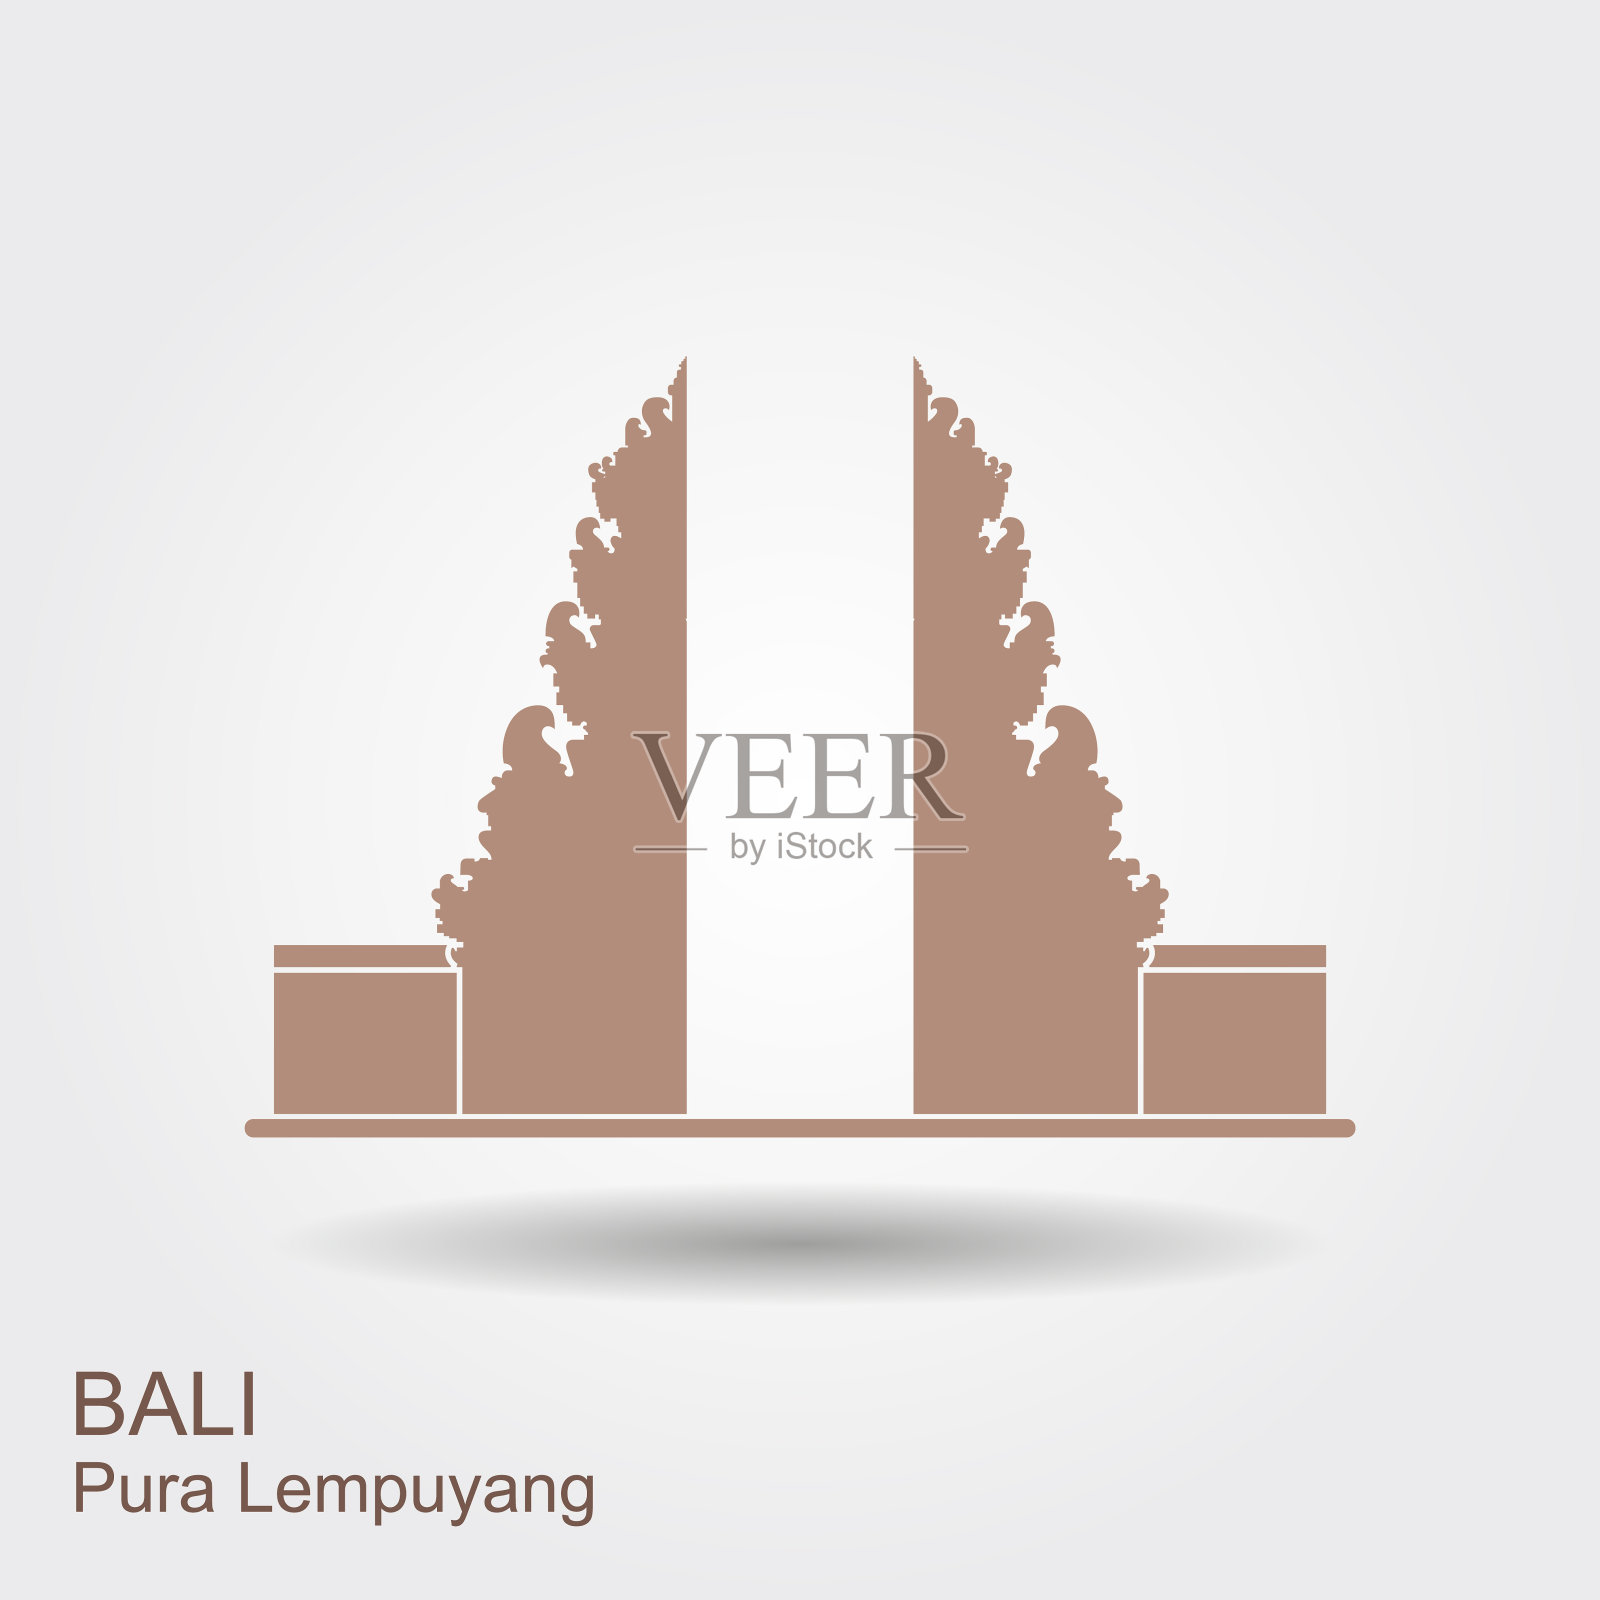 Pura Lempuyang庙的图标平带阴影。印尼宗教场所插画图片素材